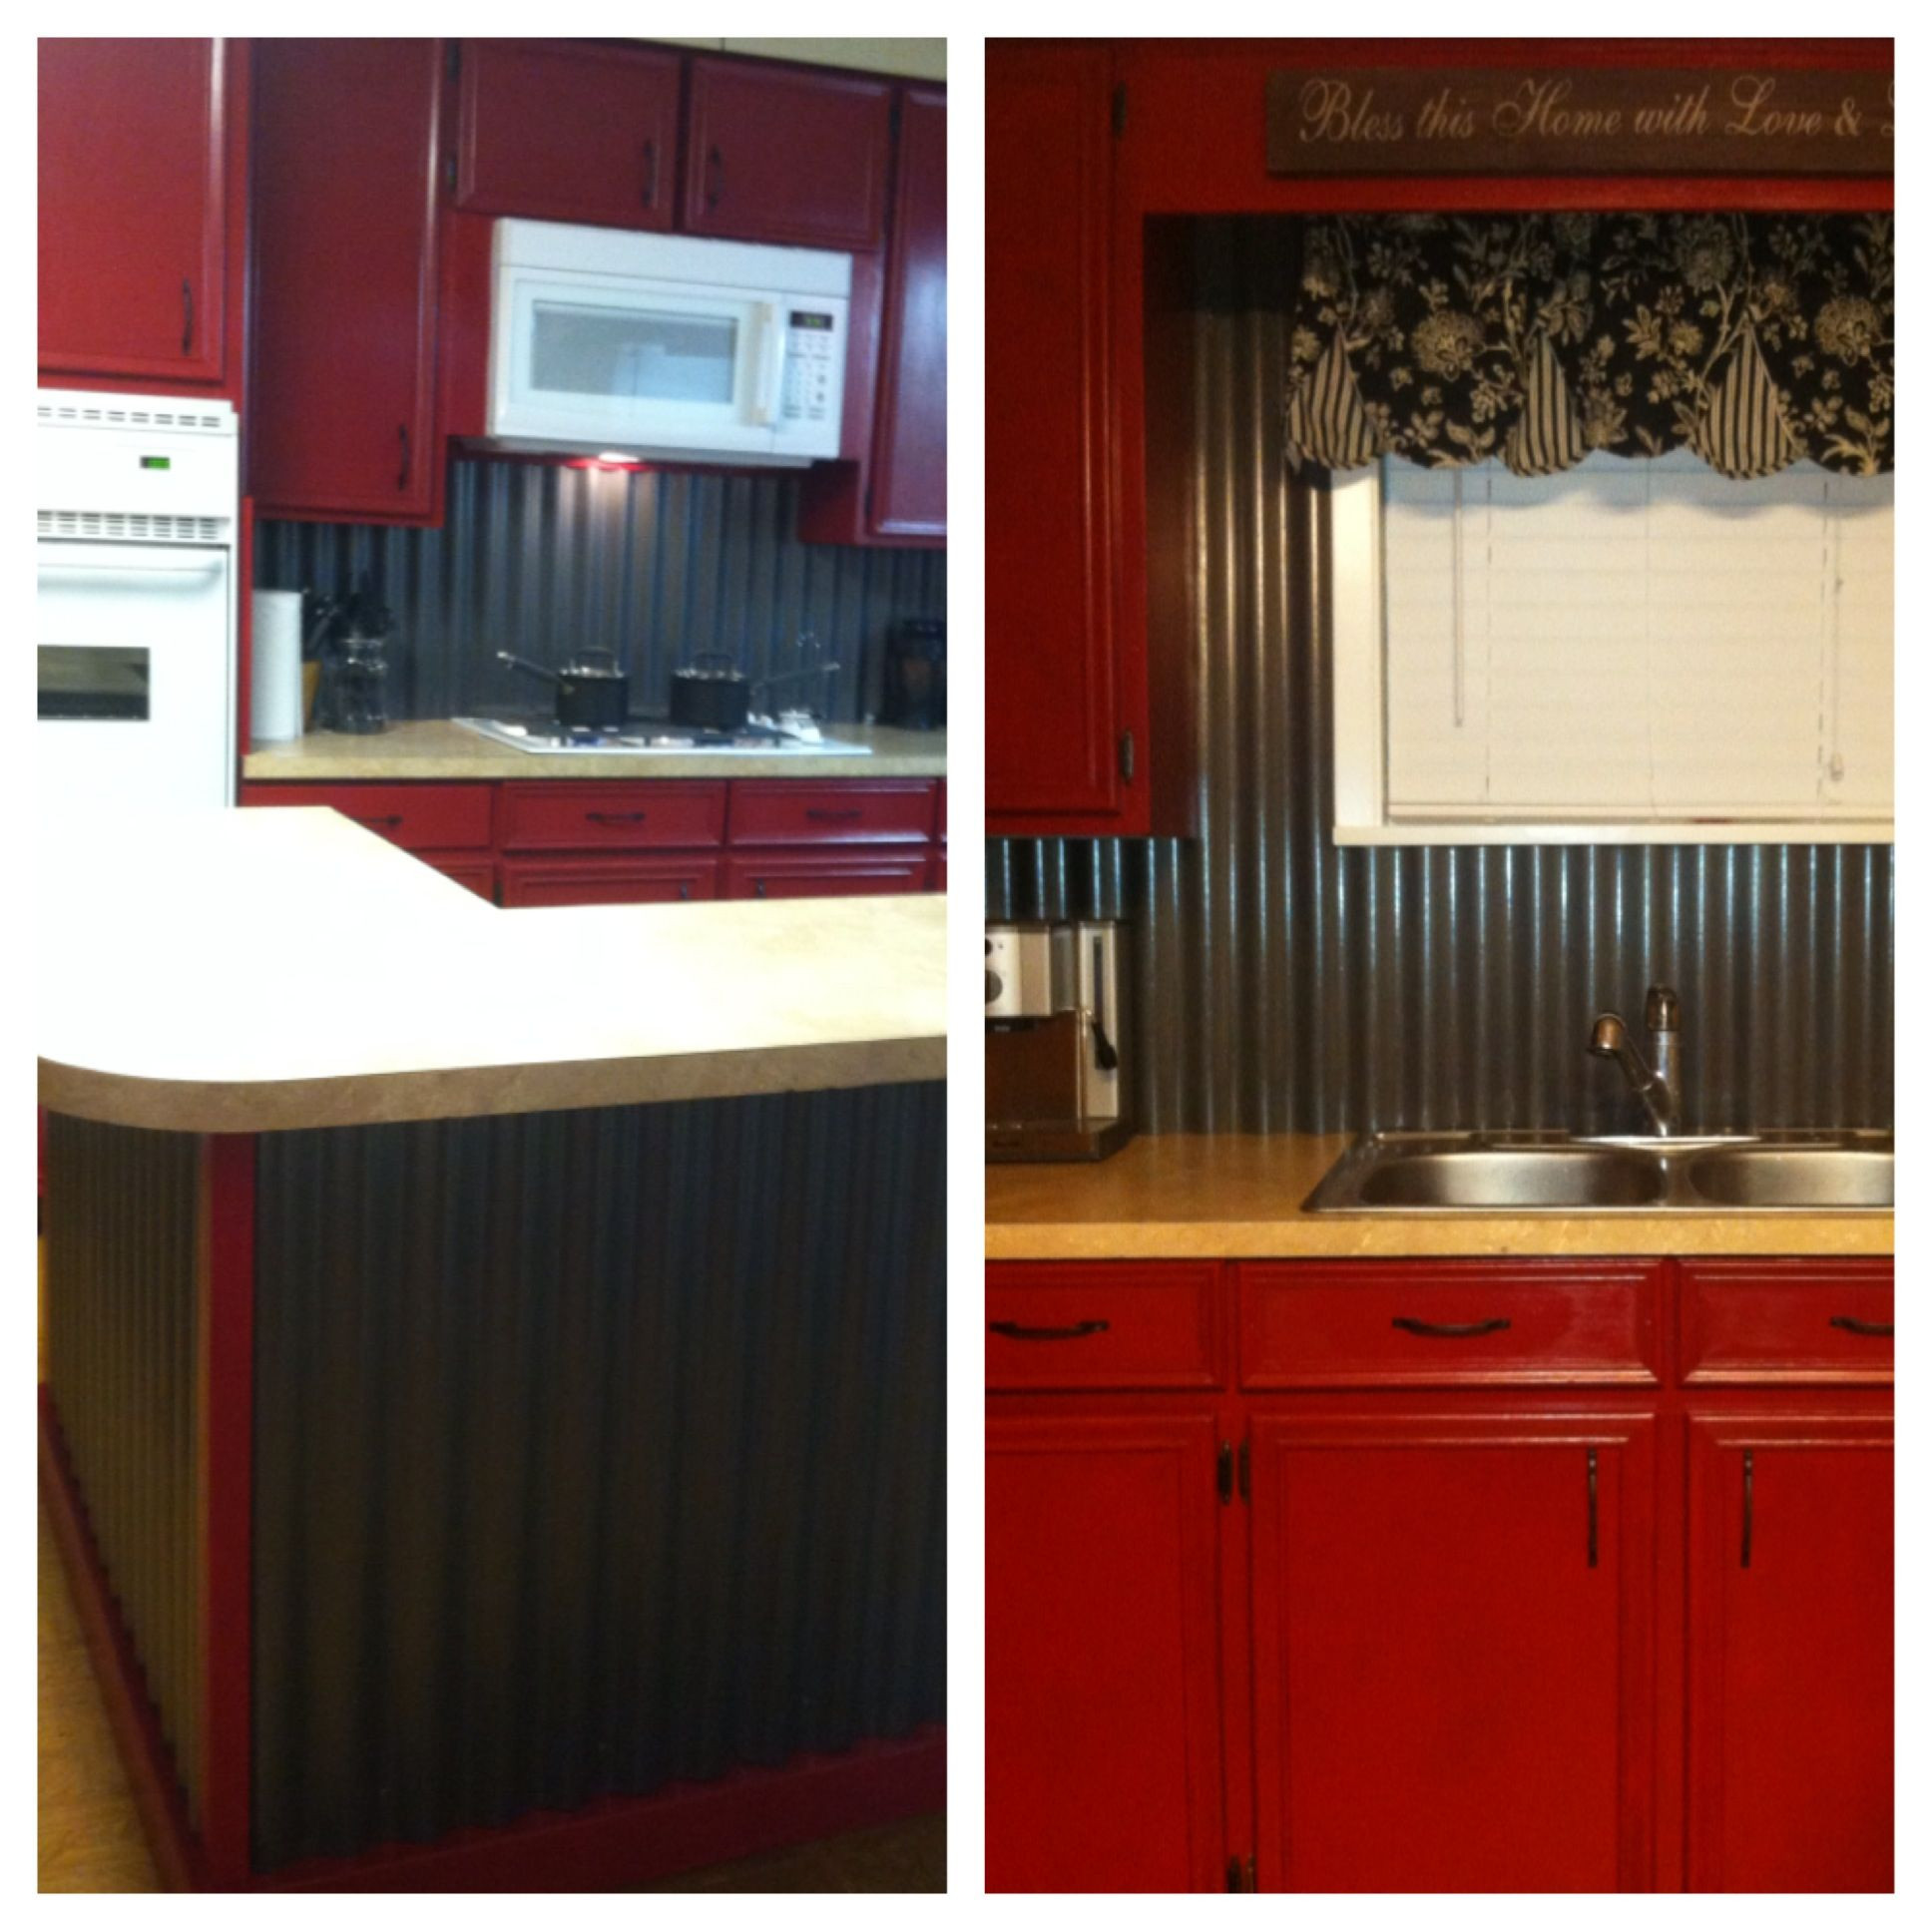 Corrugated Metal Kitchen Backsplash
 Corrugated tin backsplash & island w barn red cabinets